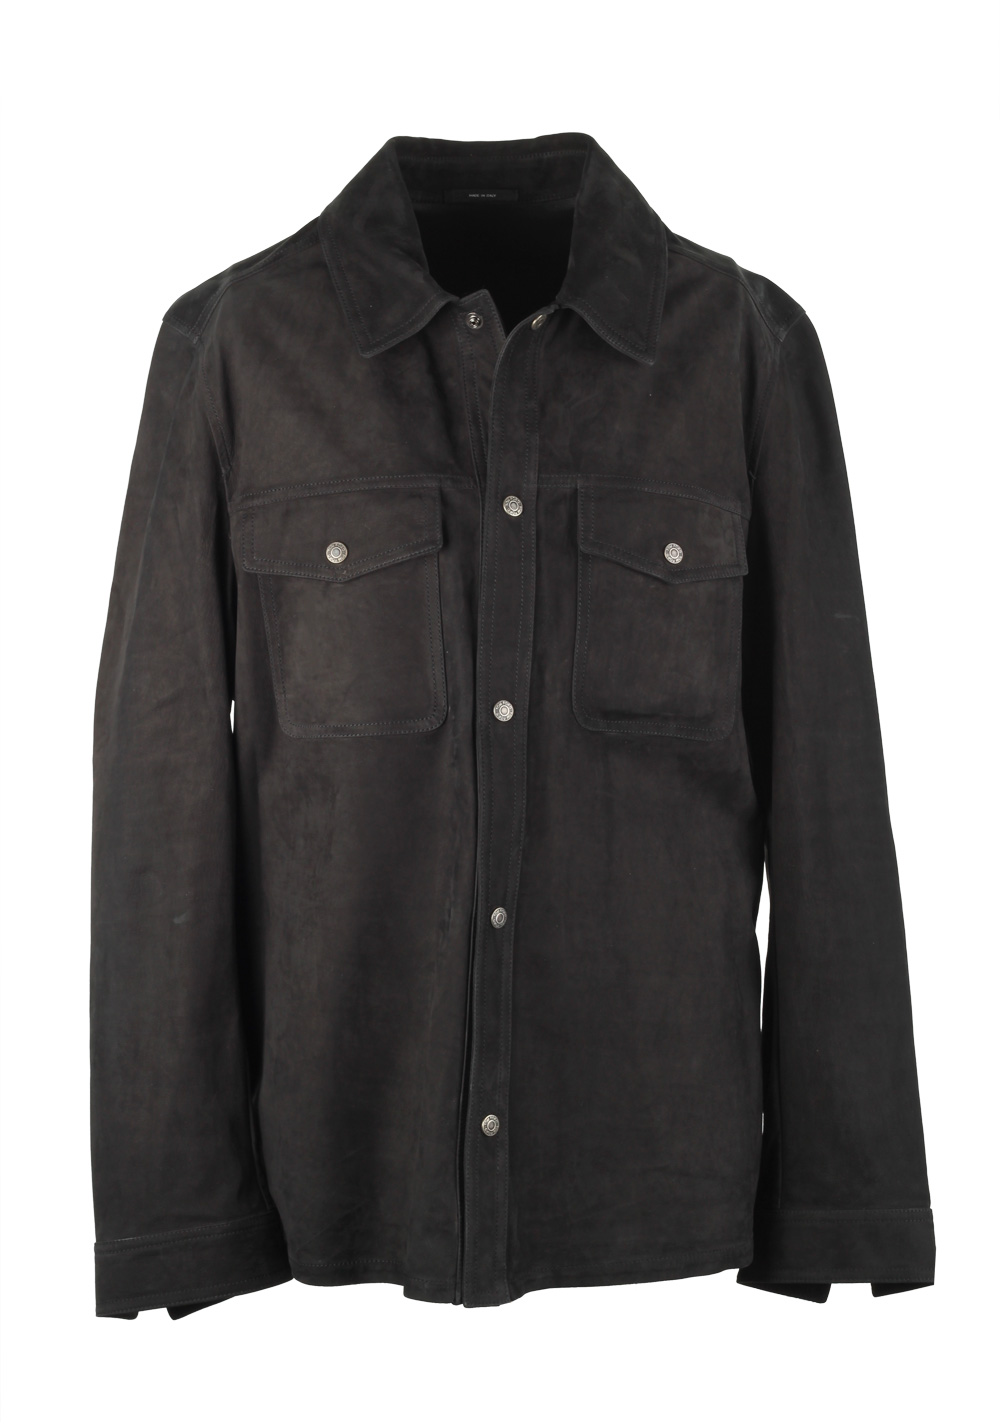 TOM FORD Black Leather Suede Jacket Coat Size 54 / 44R U.S. | Costume Limité